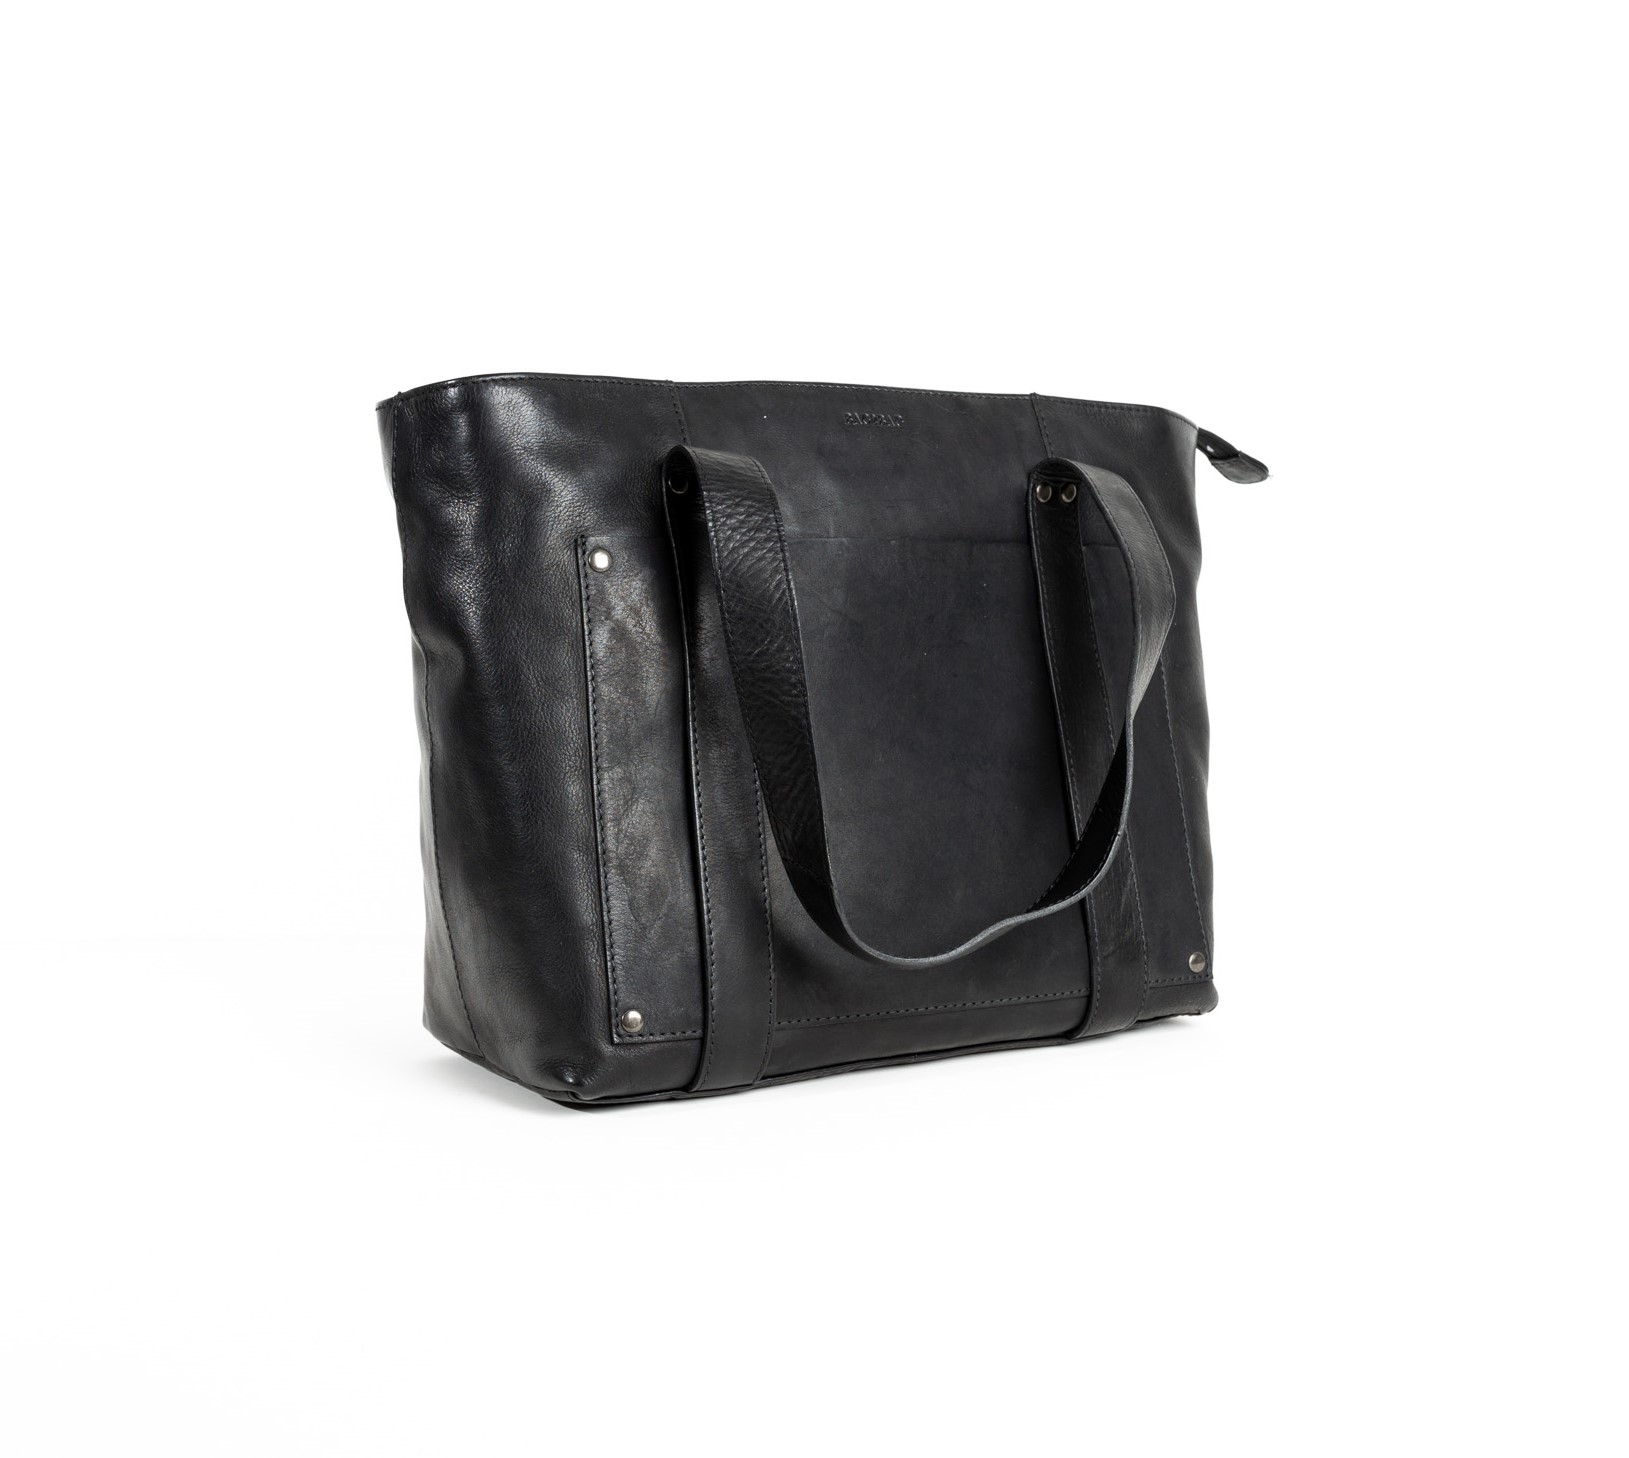 Större svart handväska i skinn